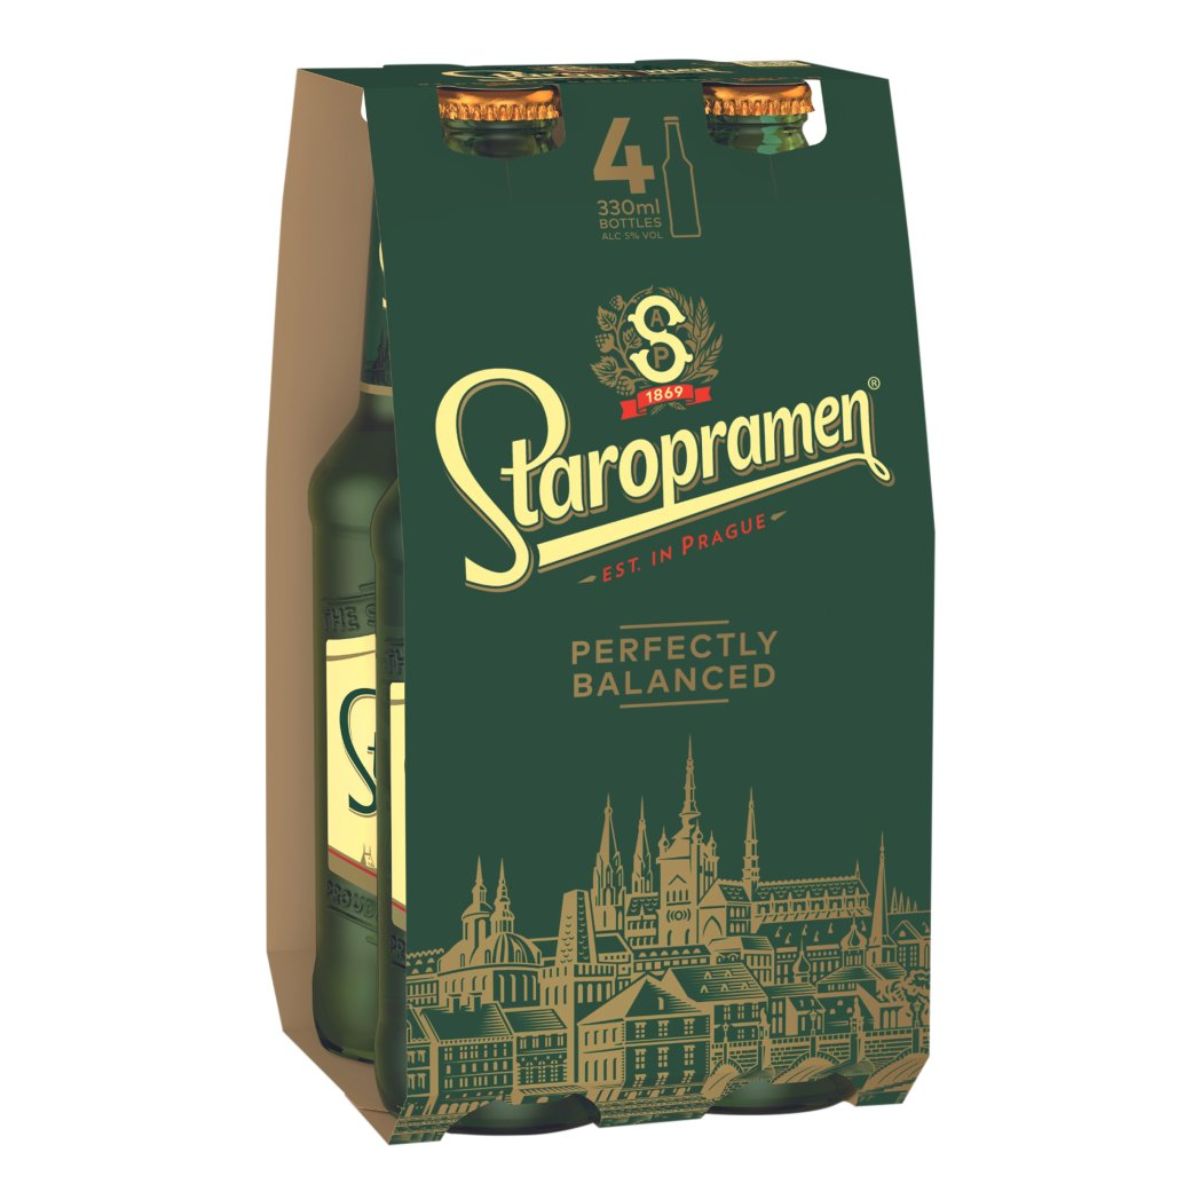 Staropramen - Beer (5% ABV) - 4 x 330ml pack is perfectly balanced.